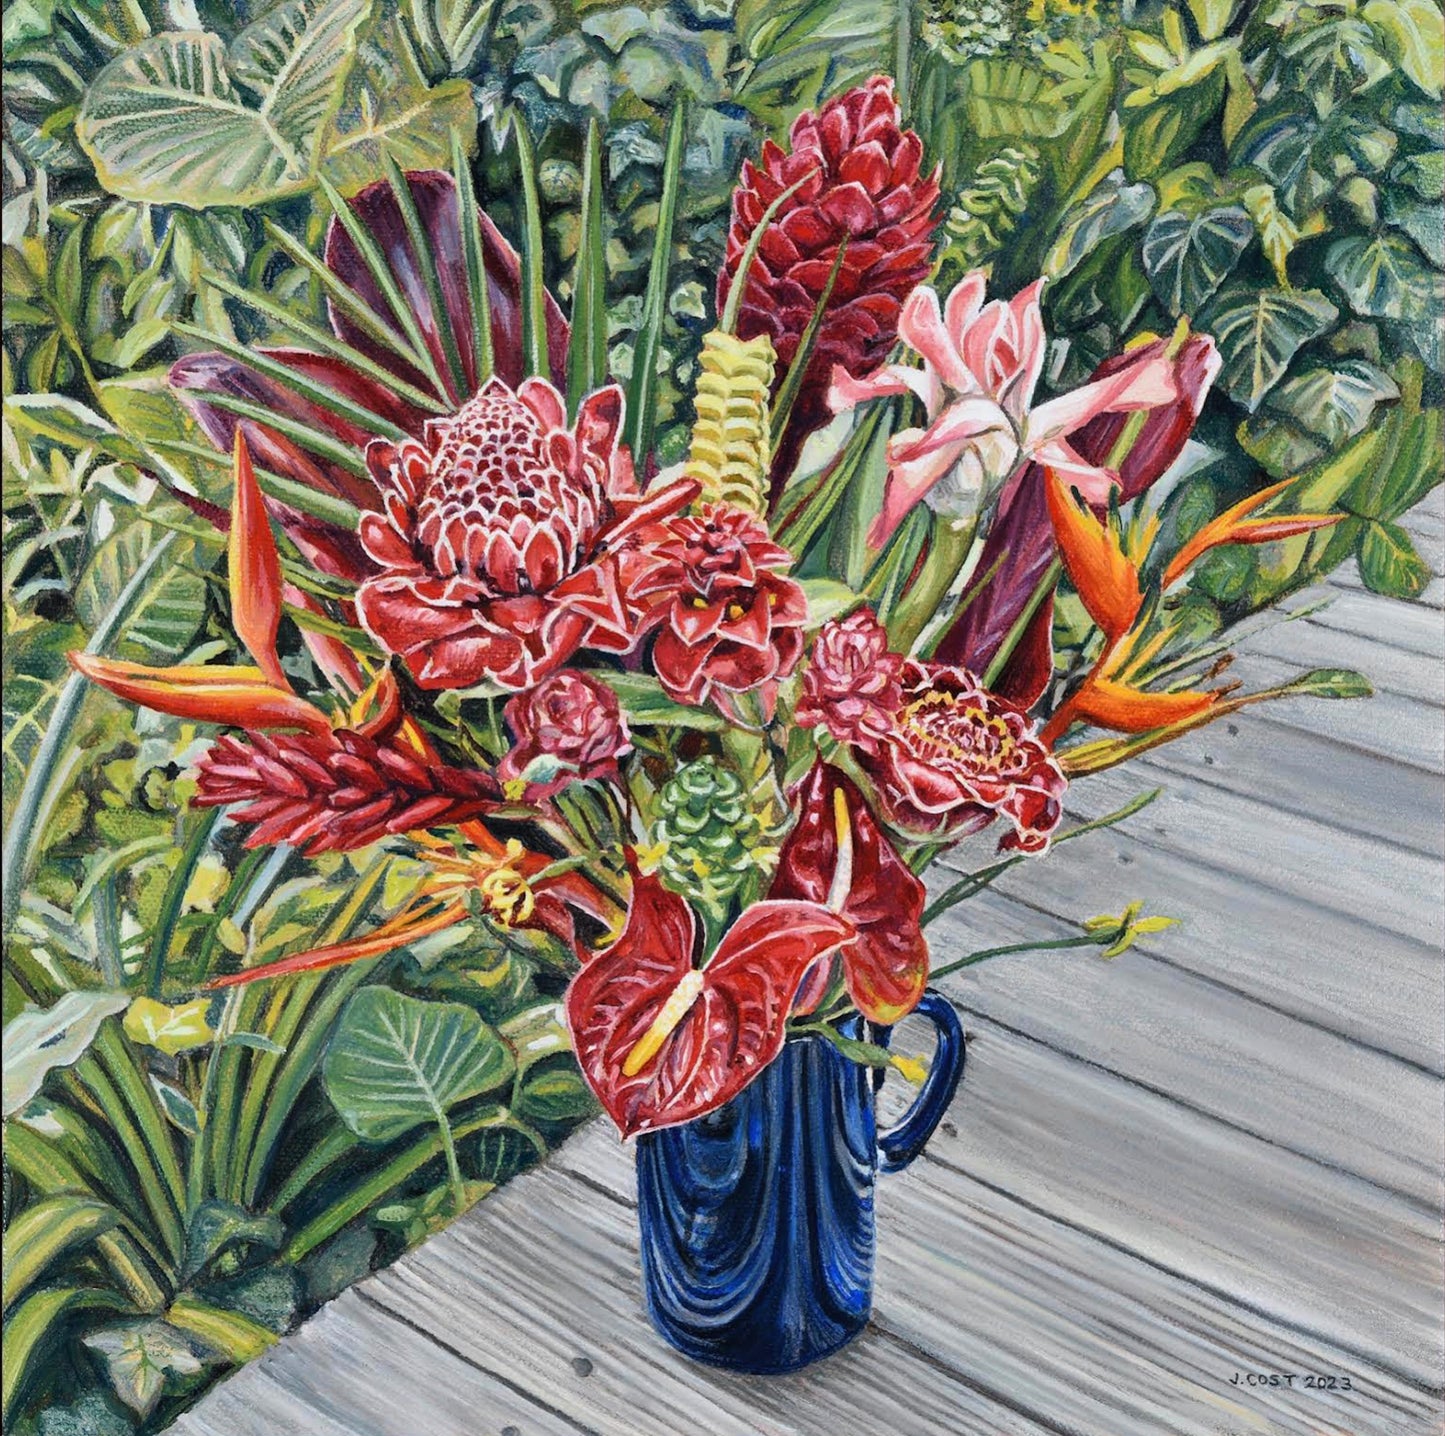 Hāna Bouquet, Limited edition, unstretched canvas giclée by Julia Allisson Cost